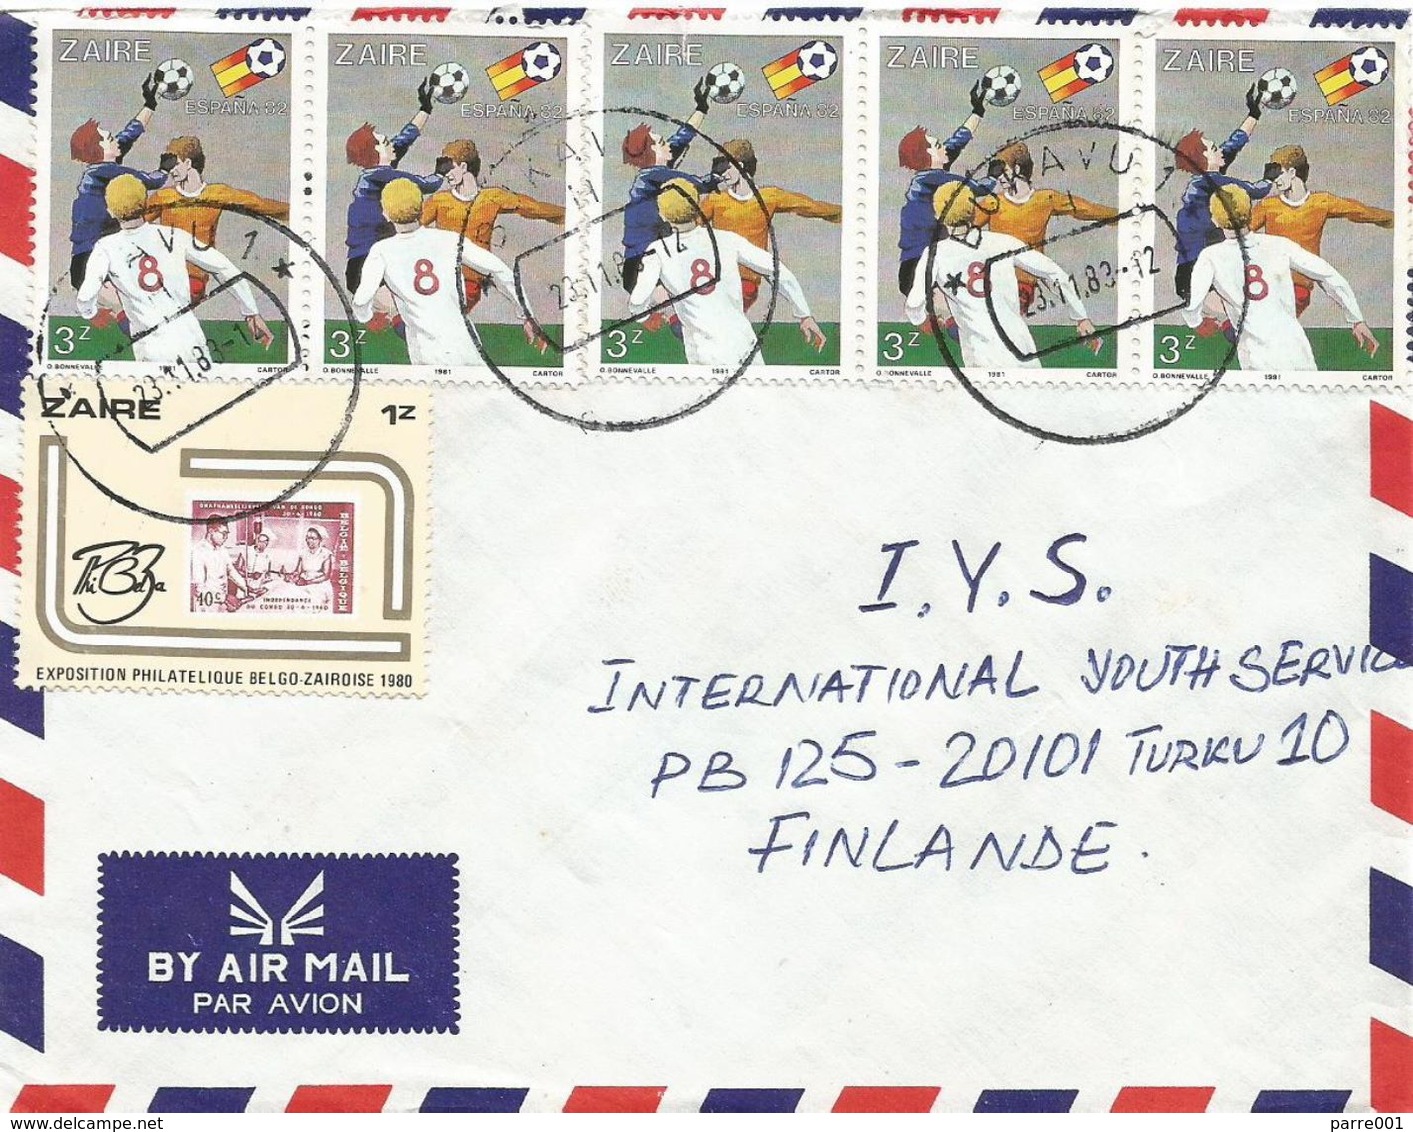 Zaire DRC Congo 1983 Bukavu World Cup Football Spain 3Z Stamp Exhibition Stamps On Stamps 1Z Cover - Oblitérés